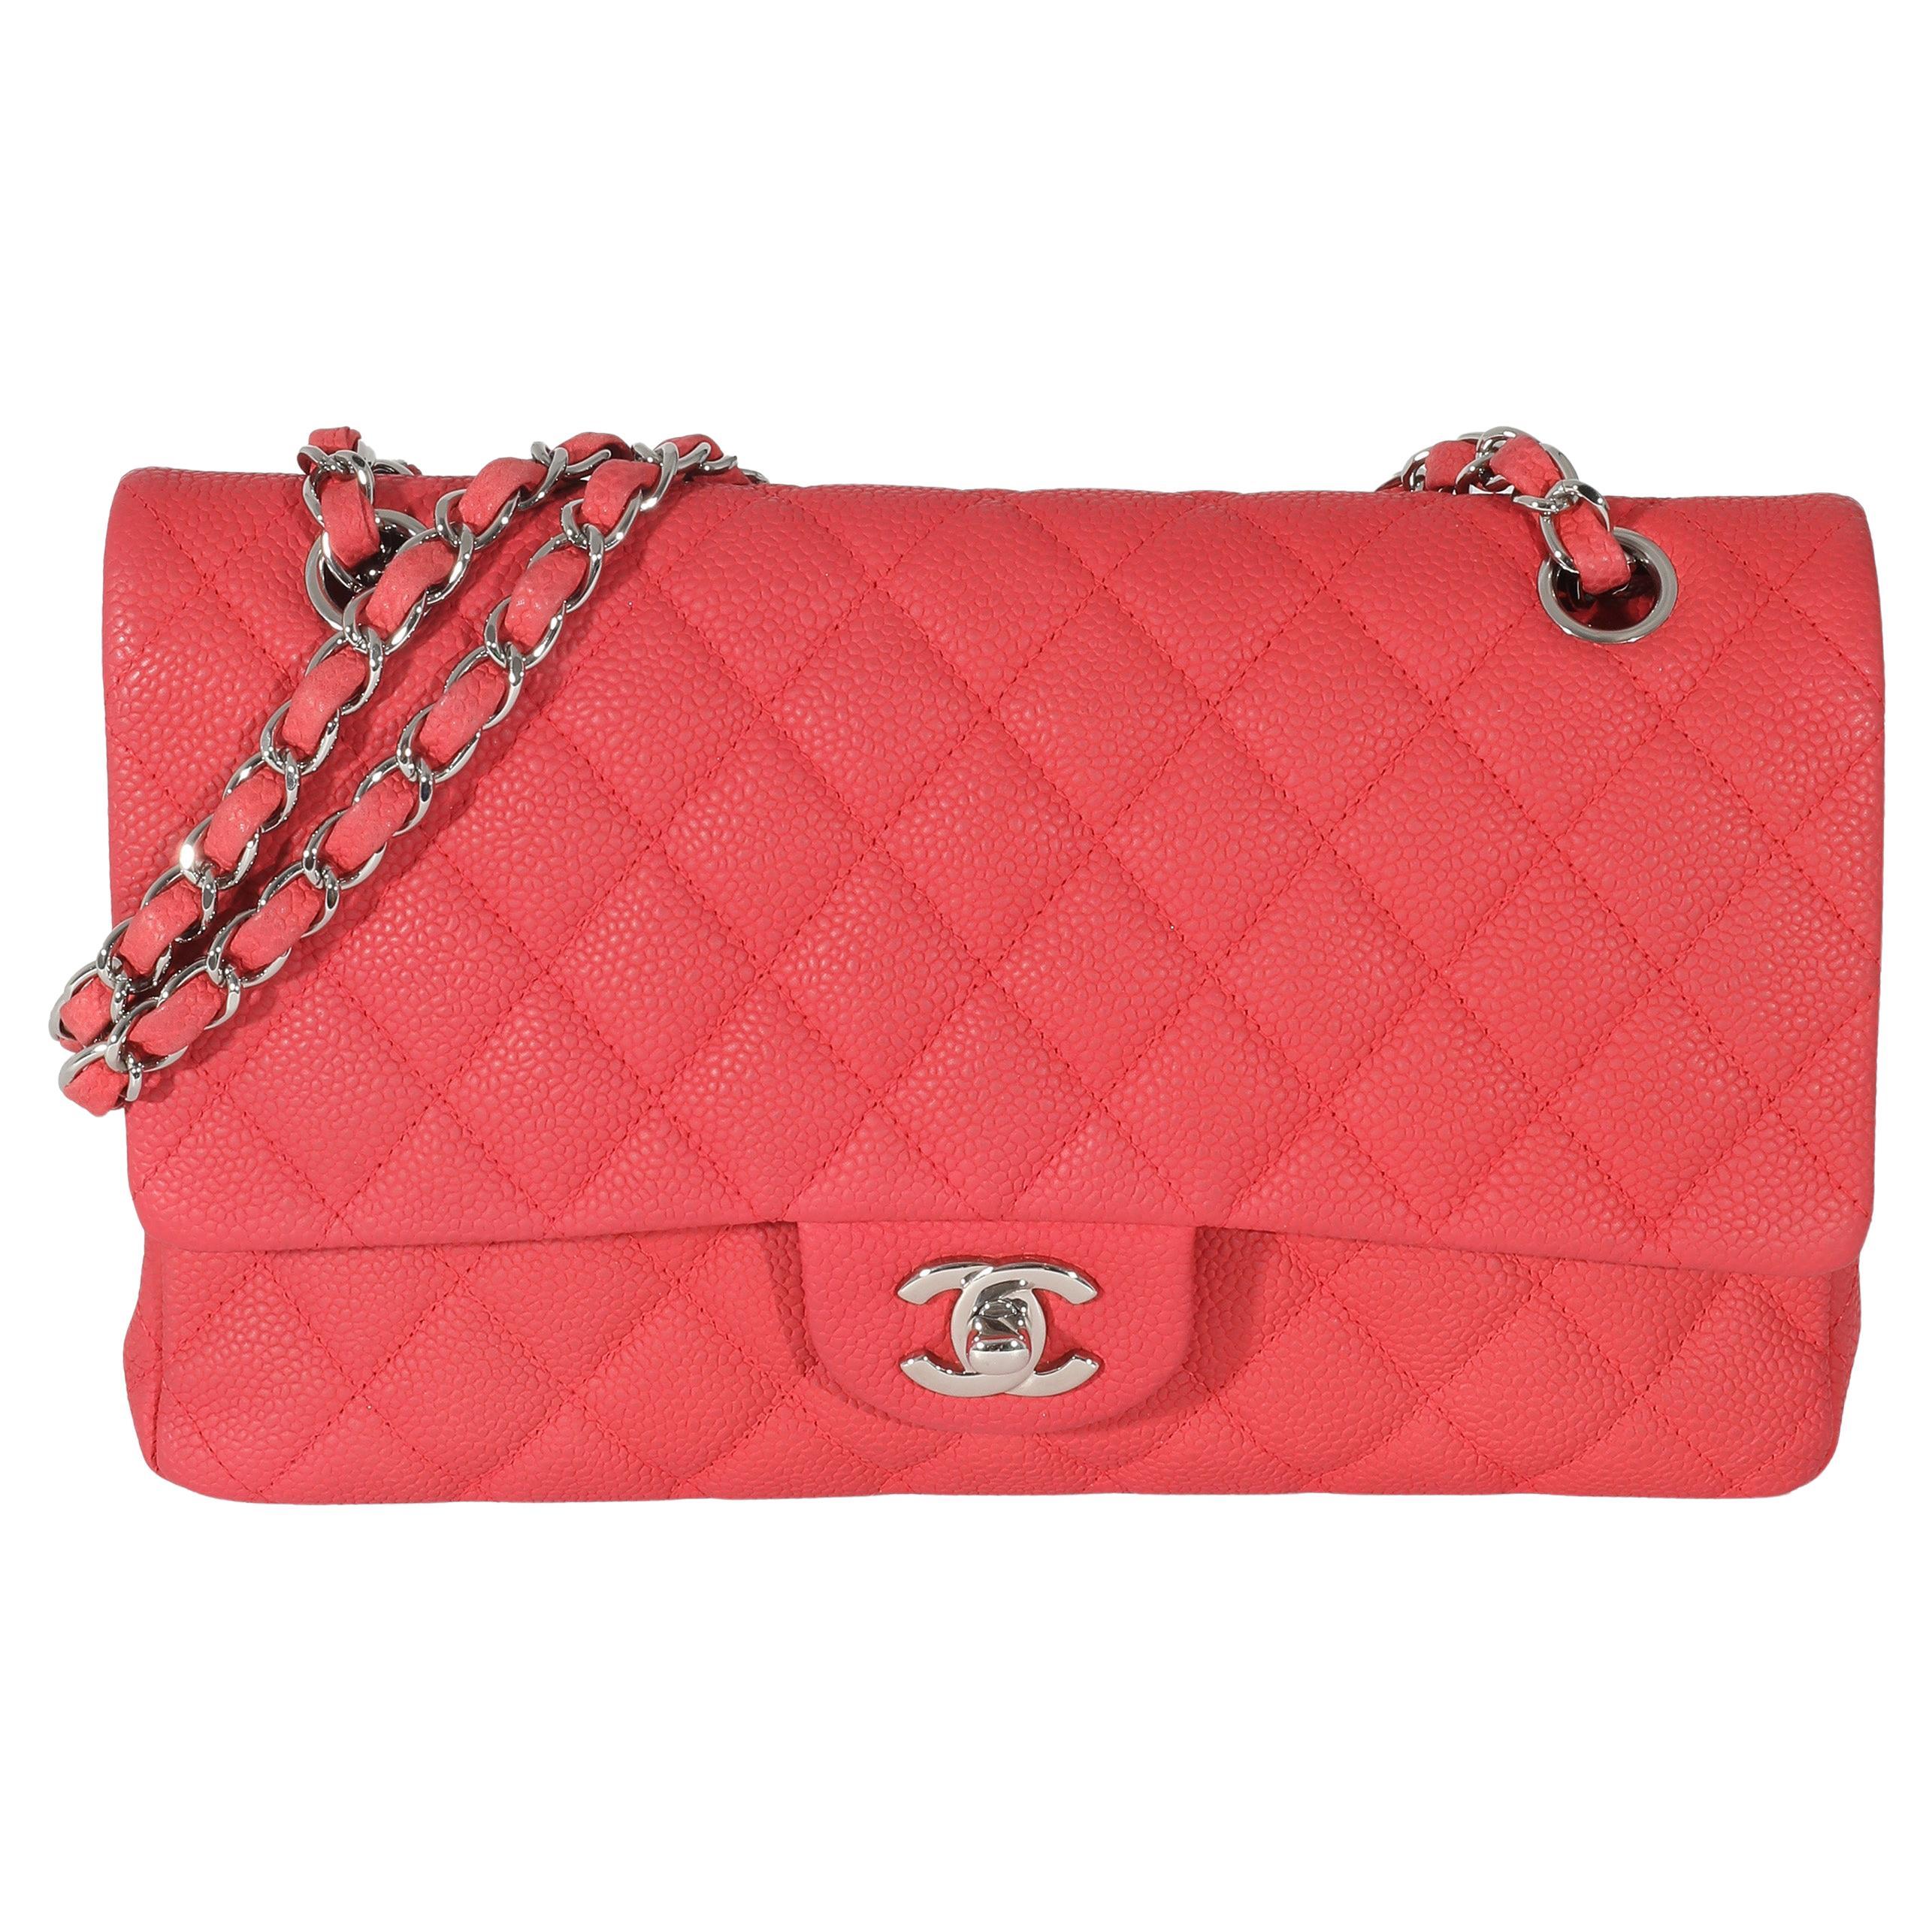 Chanel Red Matte Caviar Medium Double Flap Bag For Sale